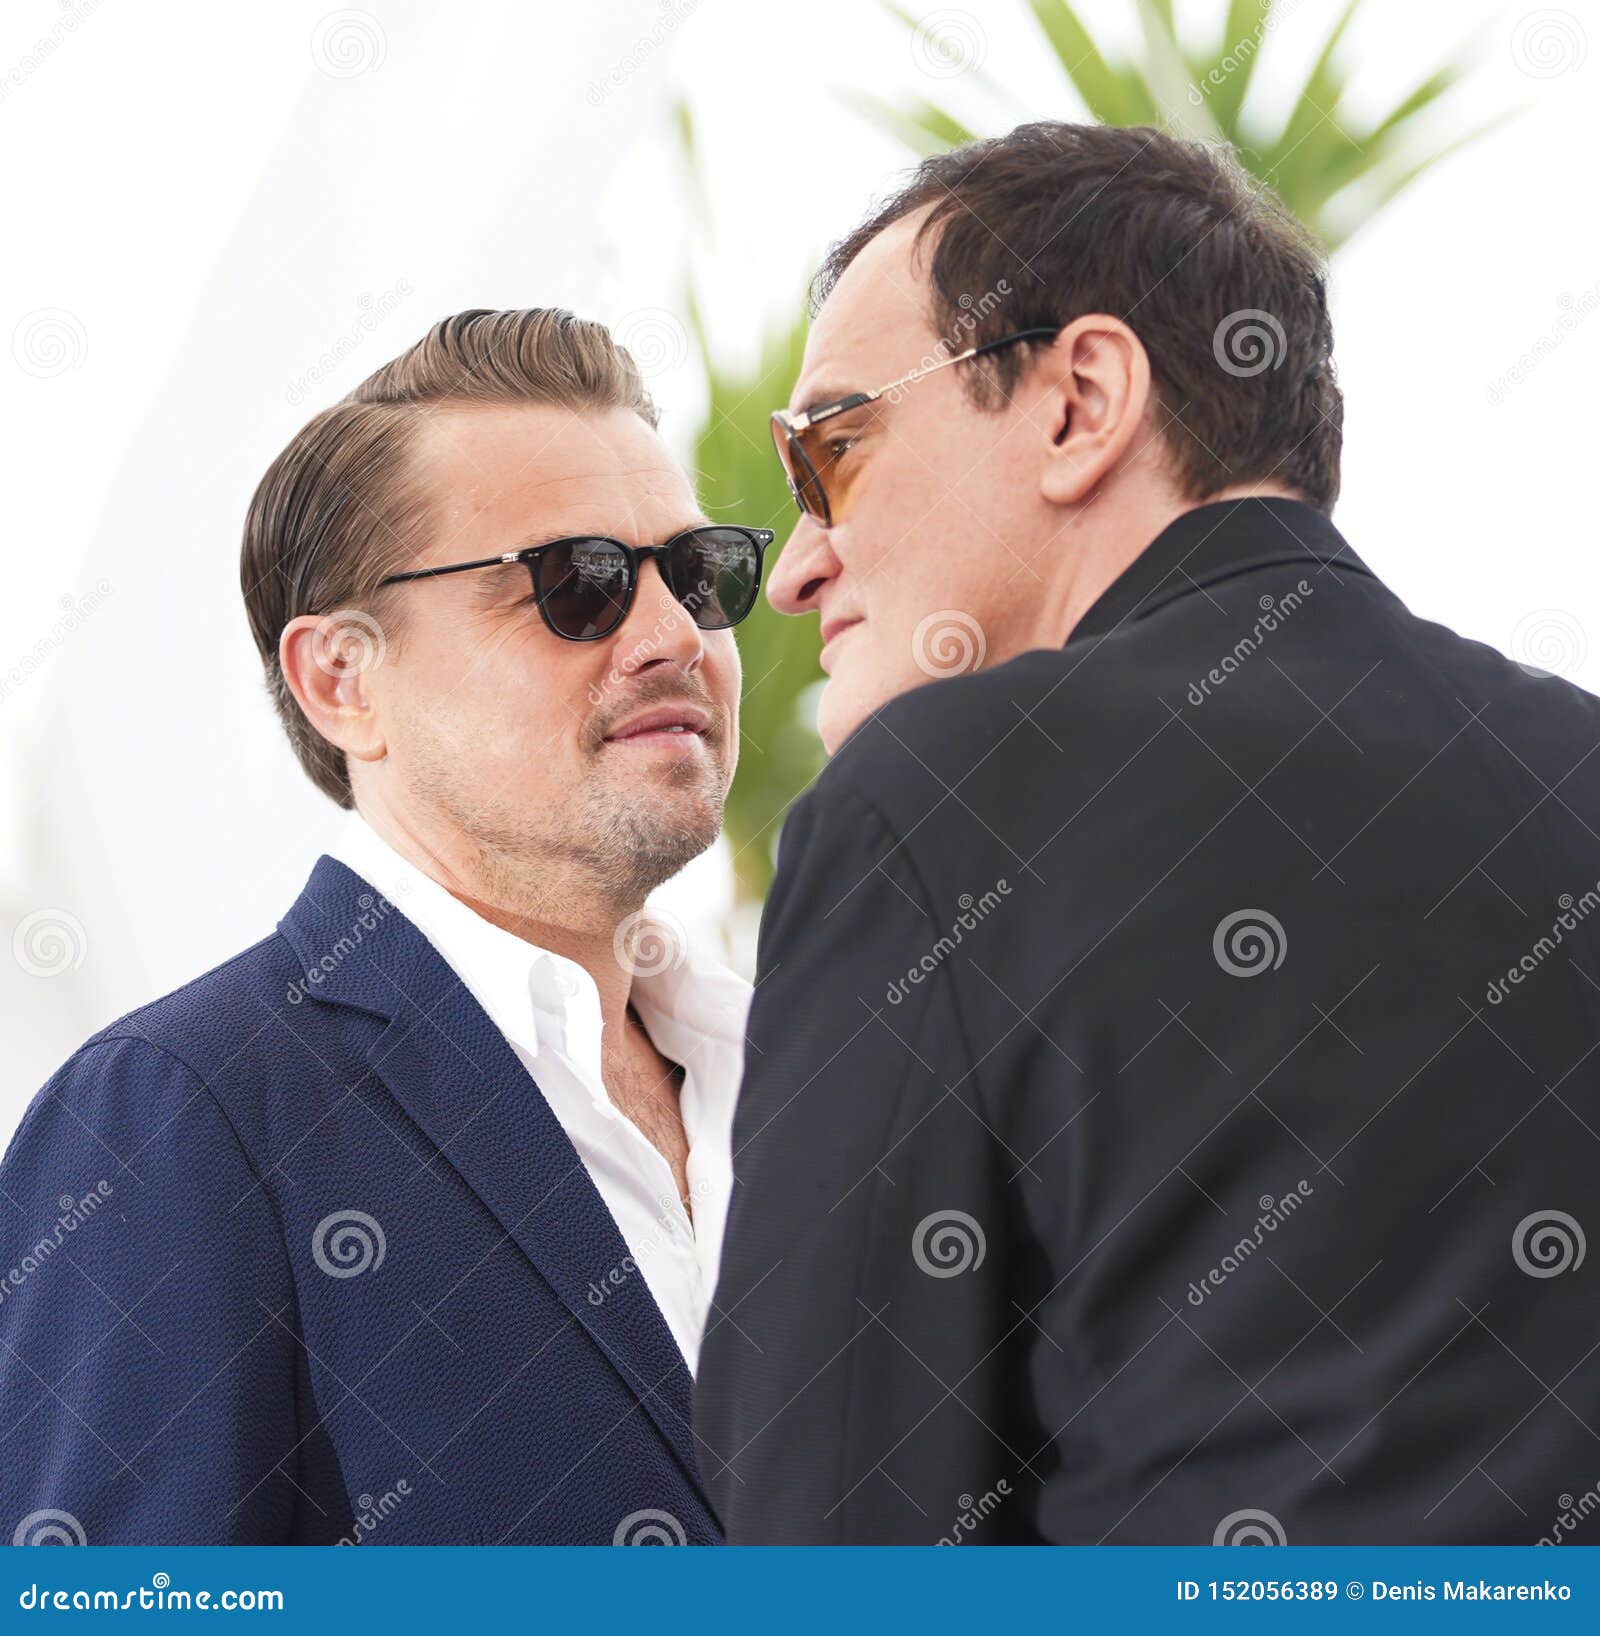 Leonardo DiCaprio in Oliver Peoples Forman L.A Sunglasses